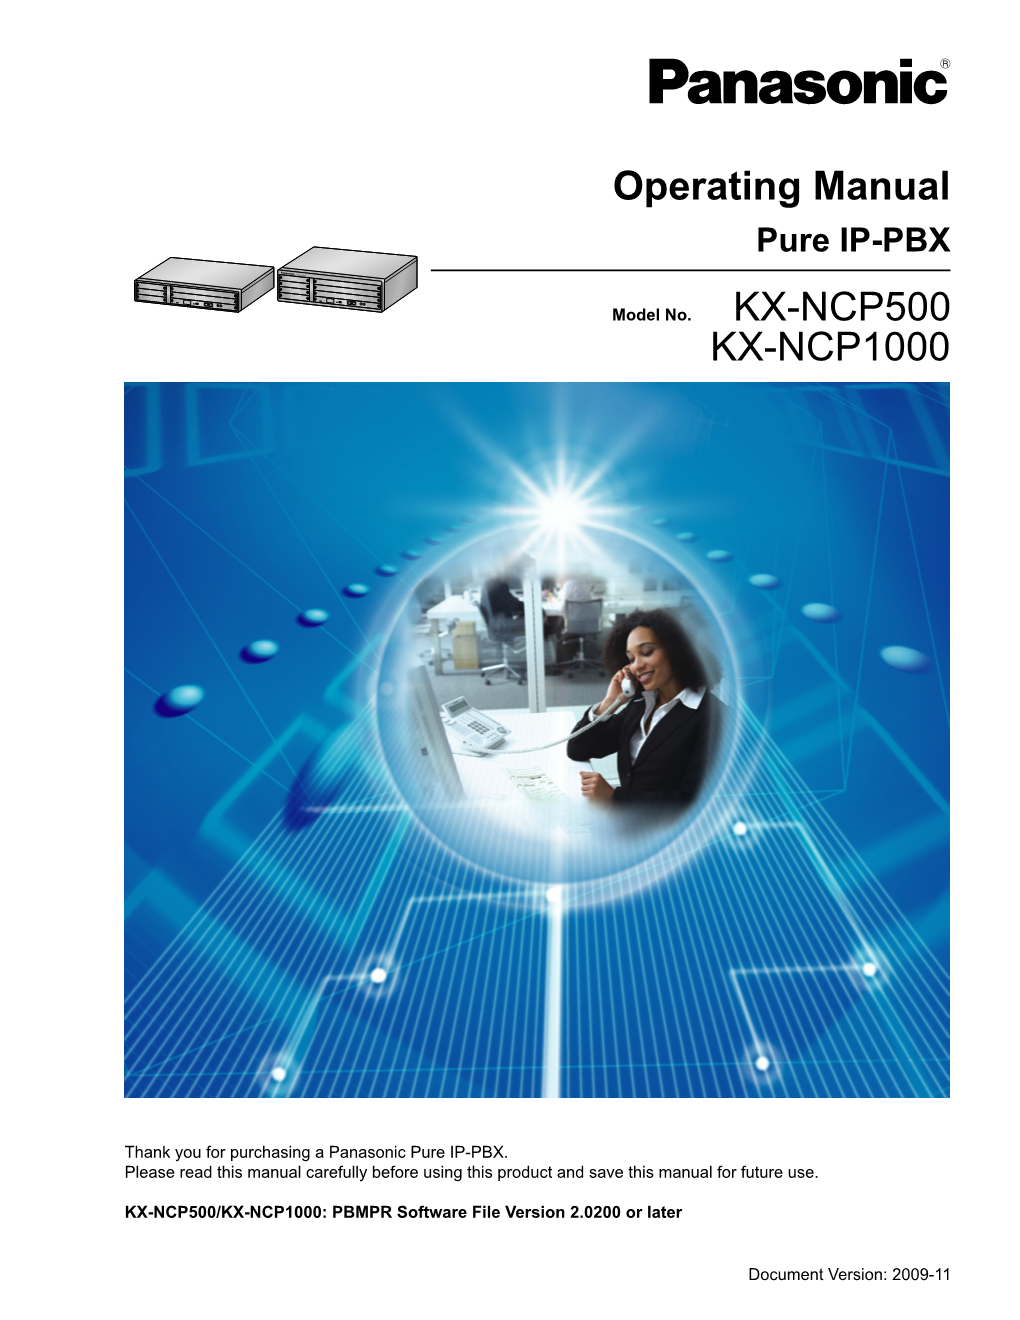 KX-NCP500-1000 Operating Manual